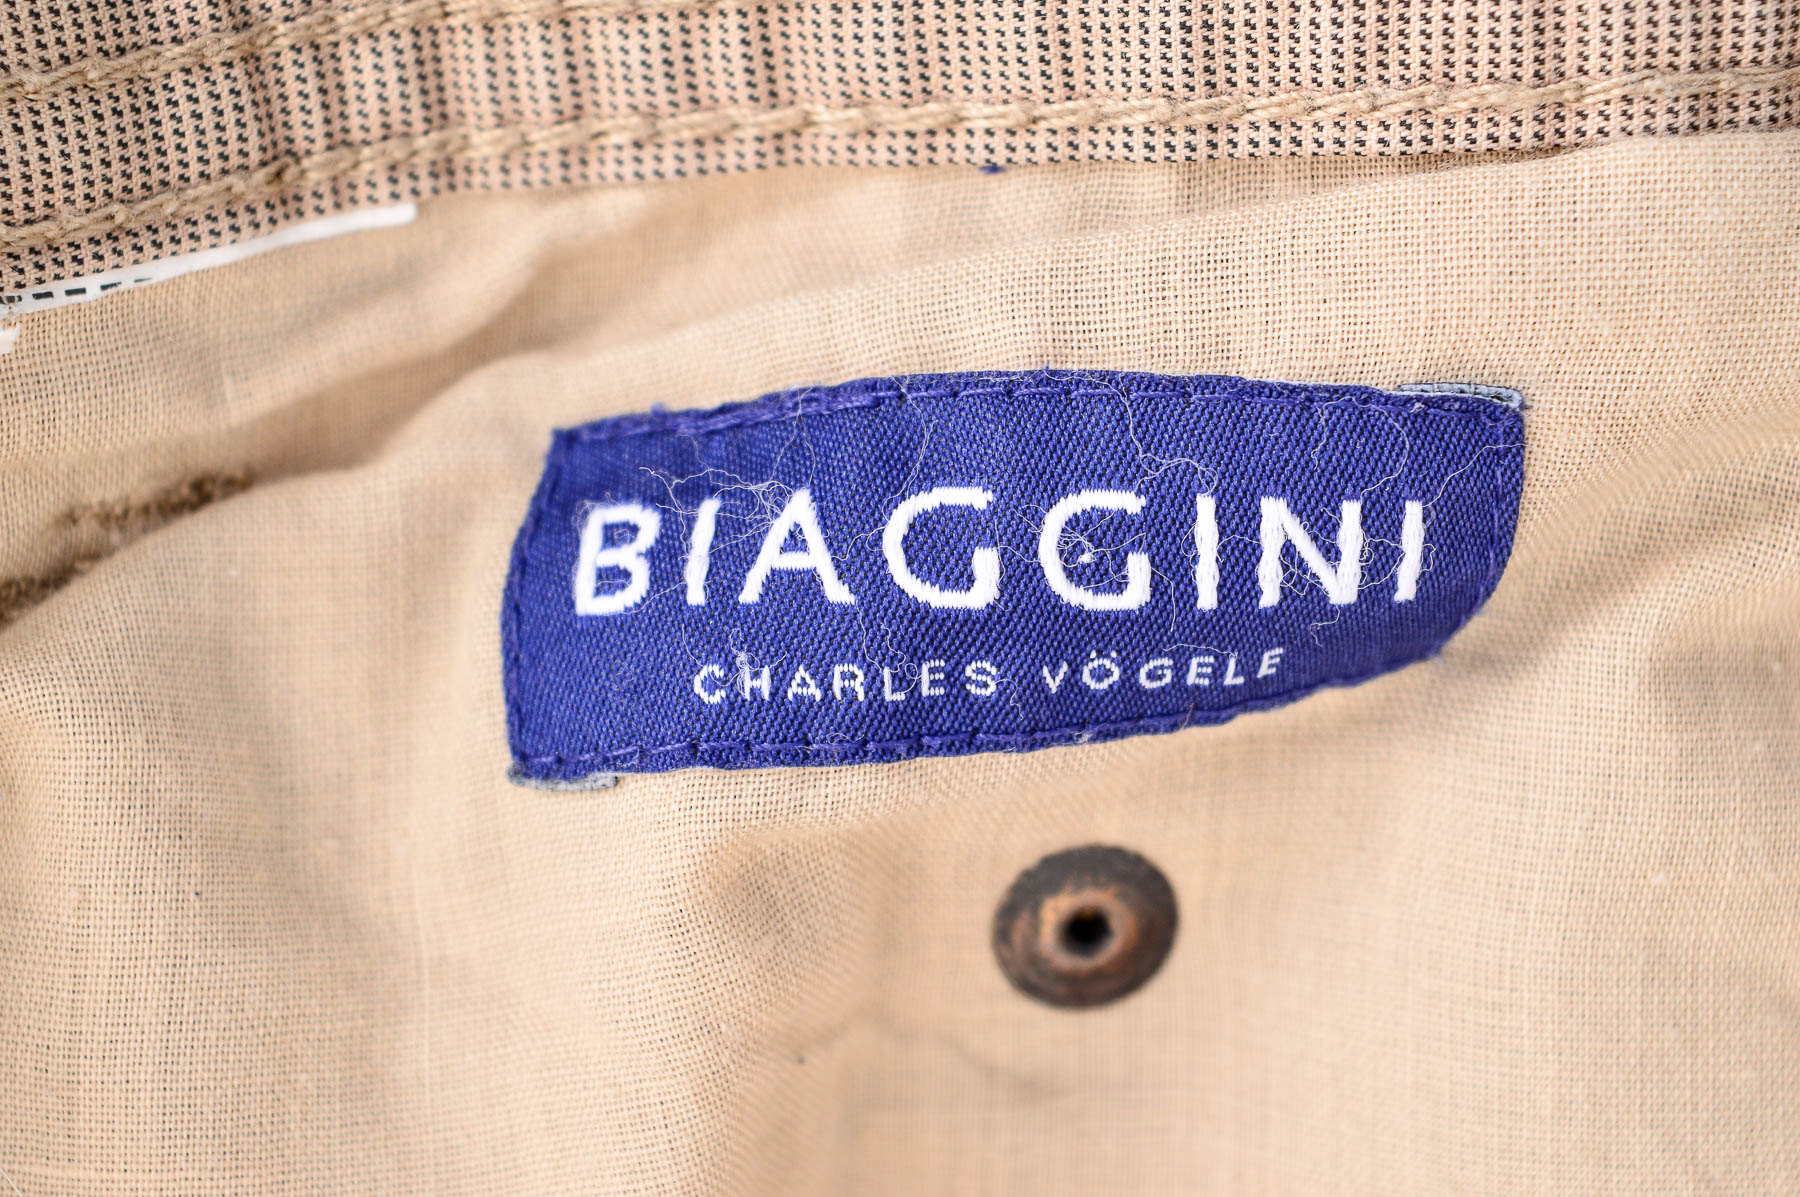 Men's trousers - Biaggini - 2